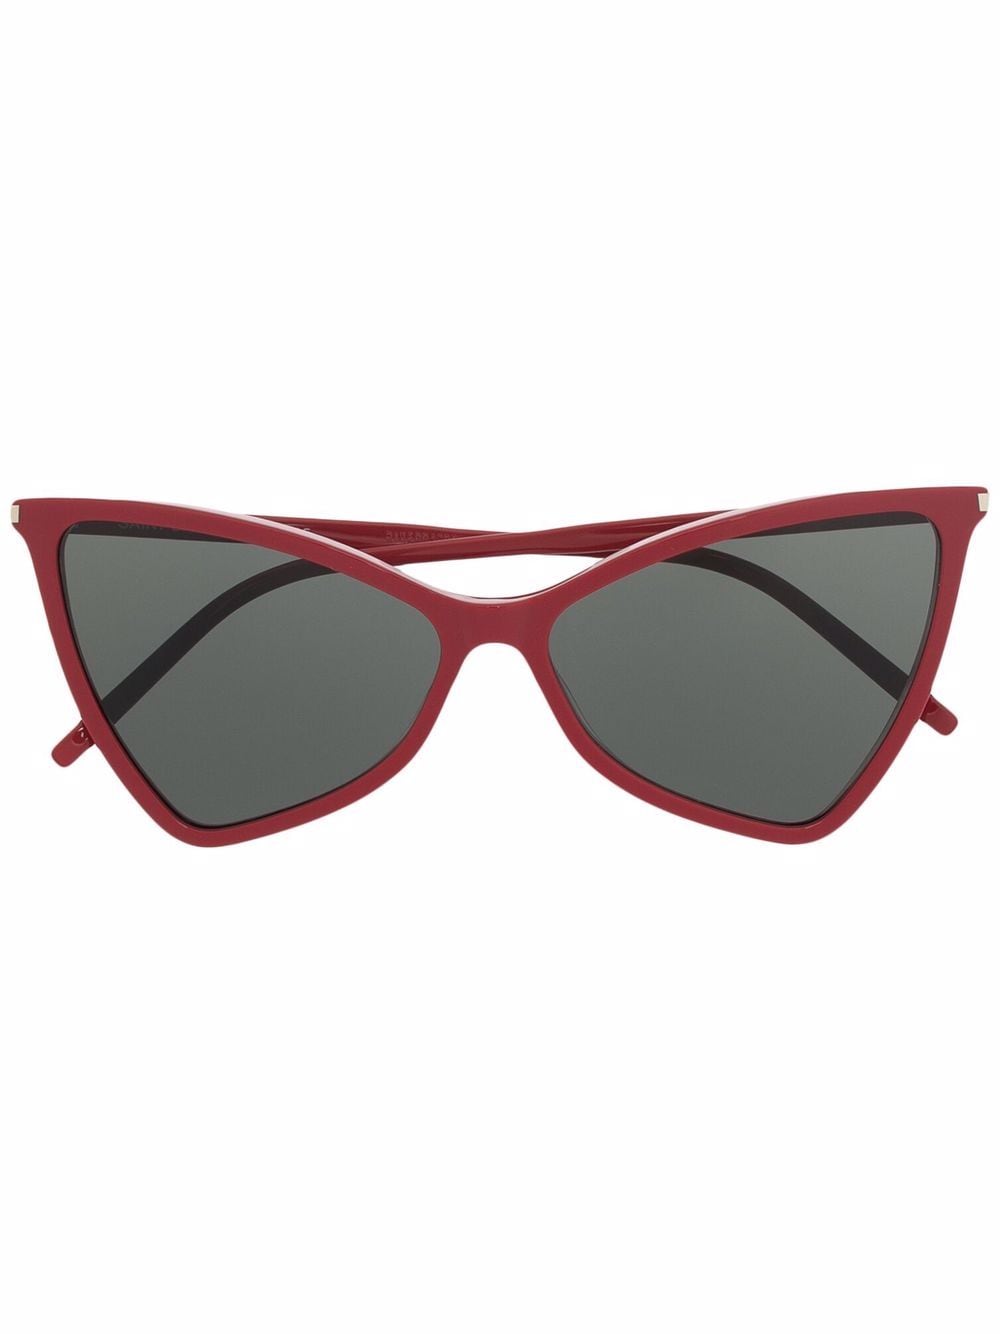 Image 1 of Saint Laurent Eyewear Jerry cat-eye sunglasses